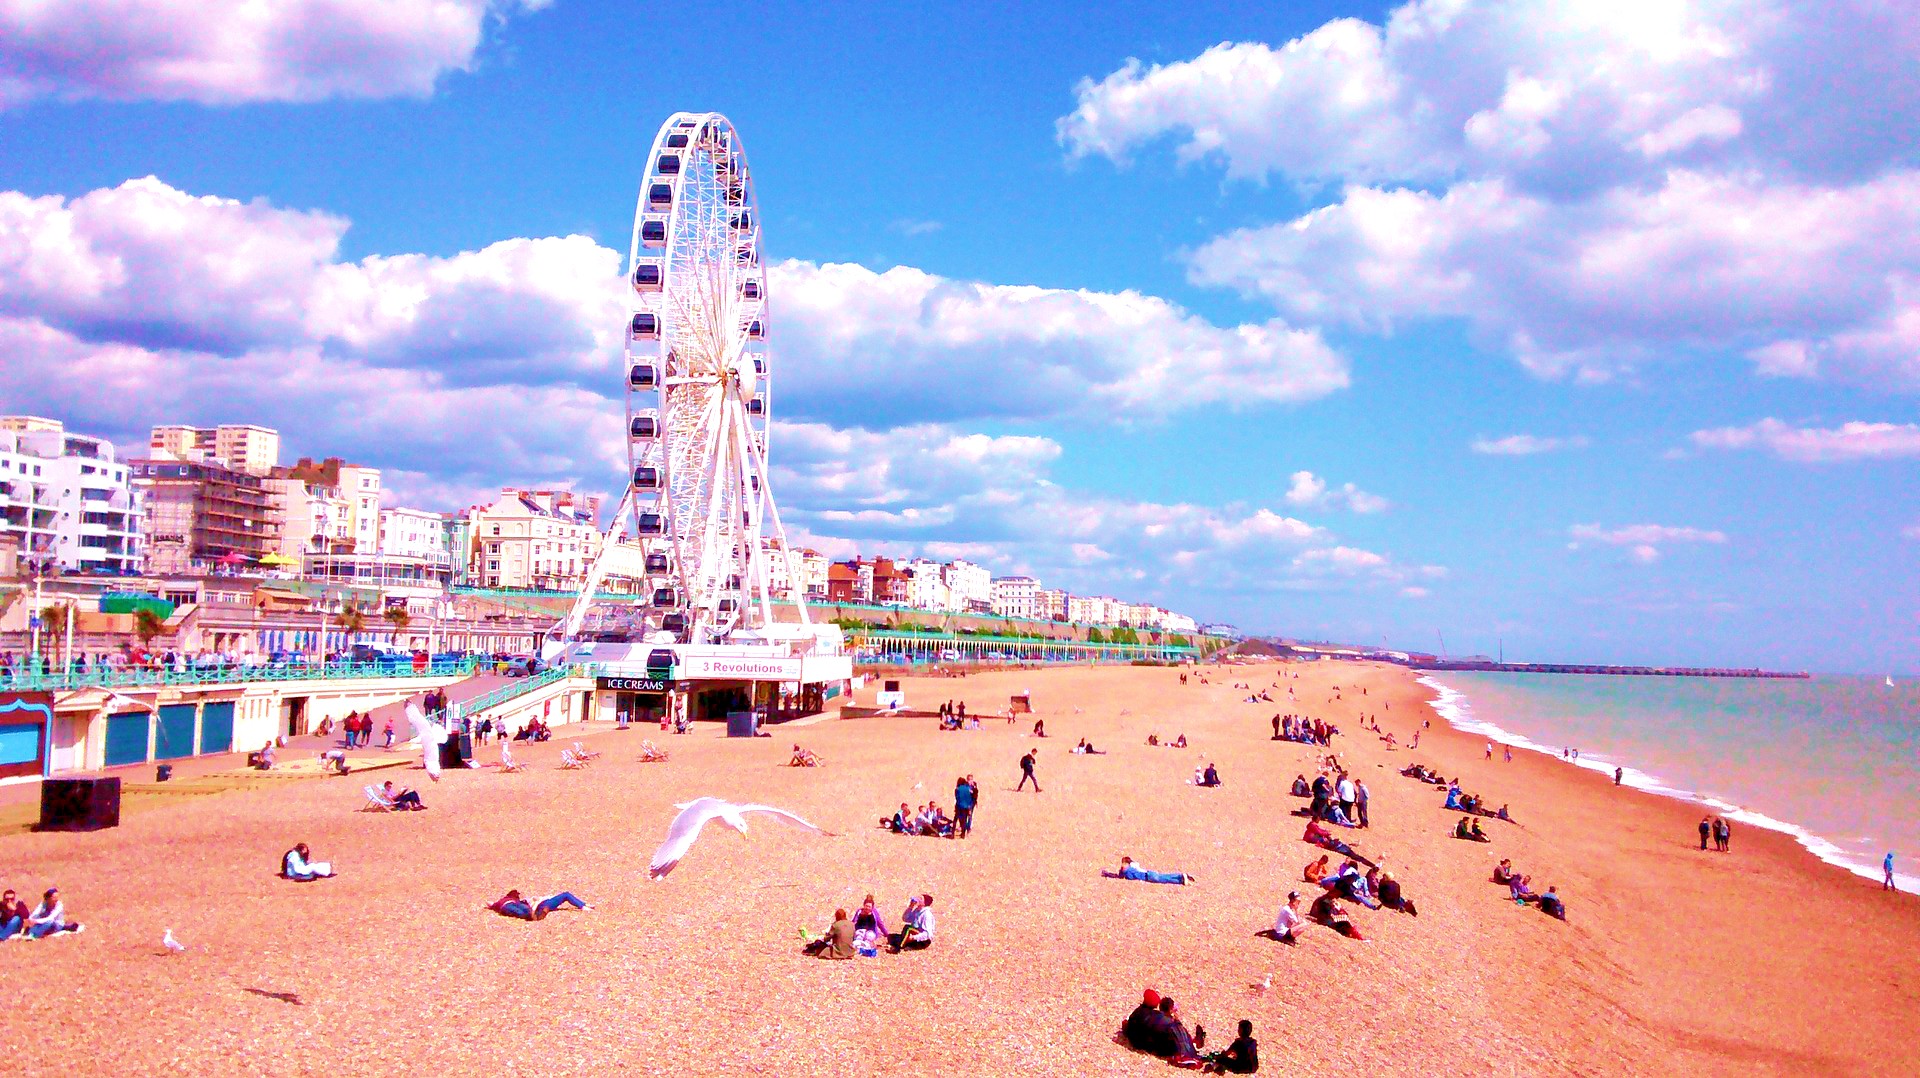 <img src="Brighton.jpg" alt="Brighton beach with view of the wheel"/> 